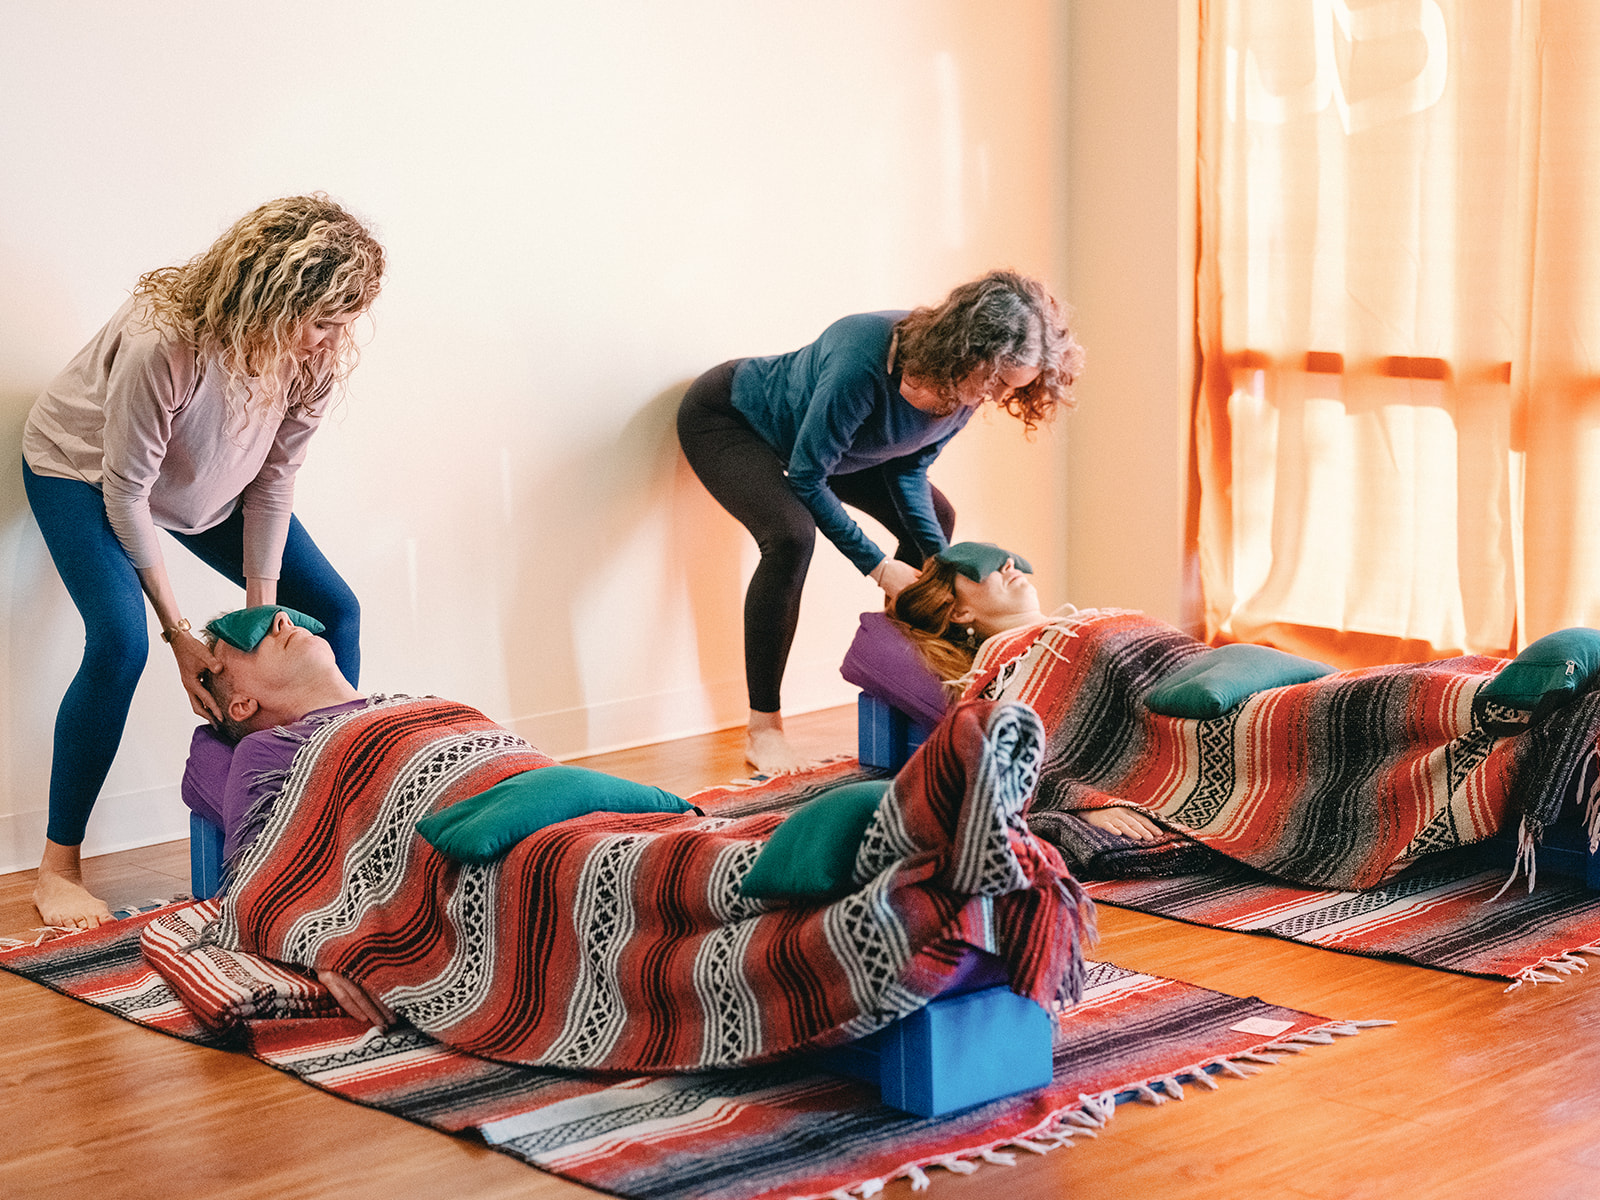 Sage Rountree and Alexandra DeSiato in a restorative yoga workshop